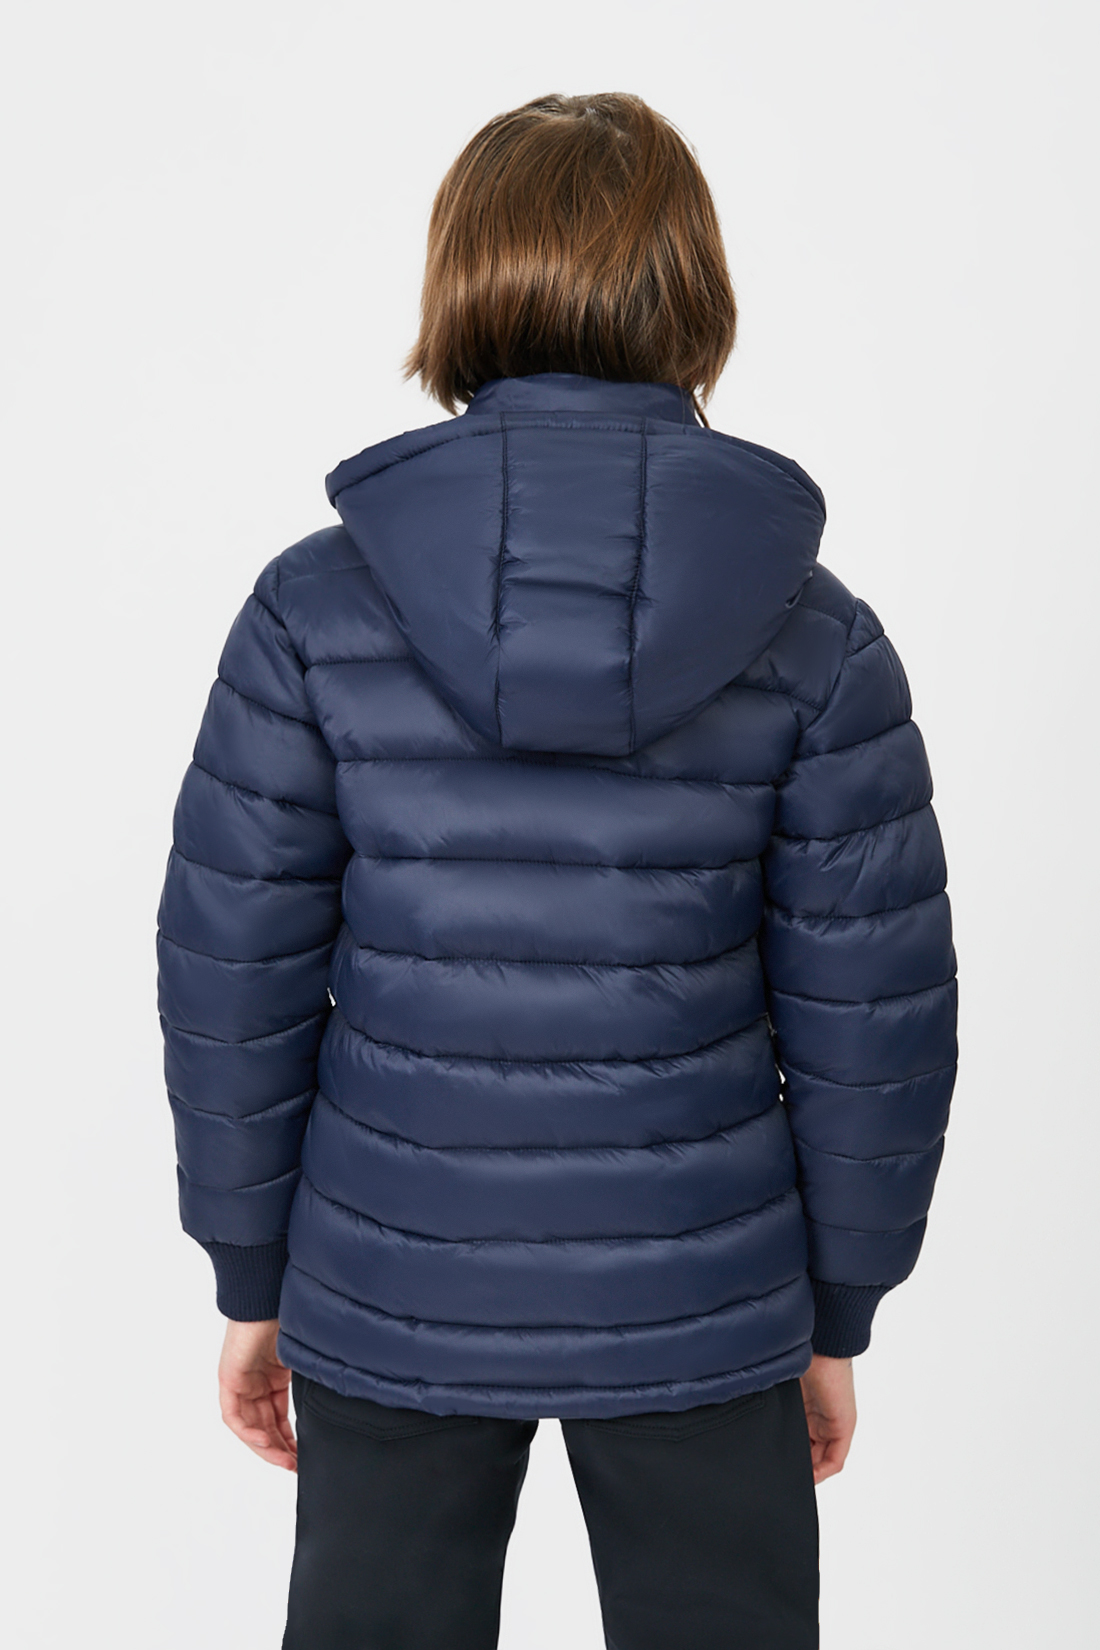 Куртка (Эко пух) (арт. baon BK541503), размер 140, цвет синий Куртка (Эко пух) (арт. baon BK541503) - фото 2